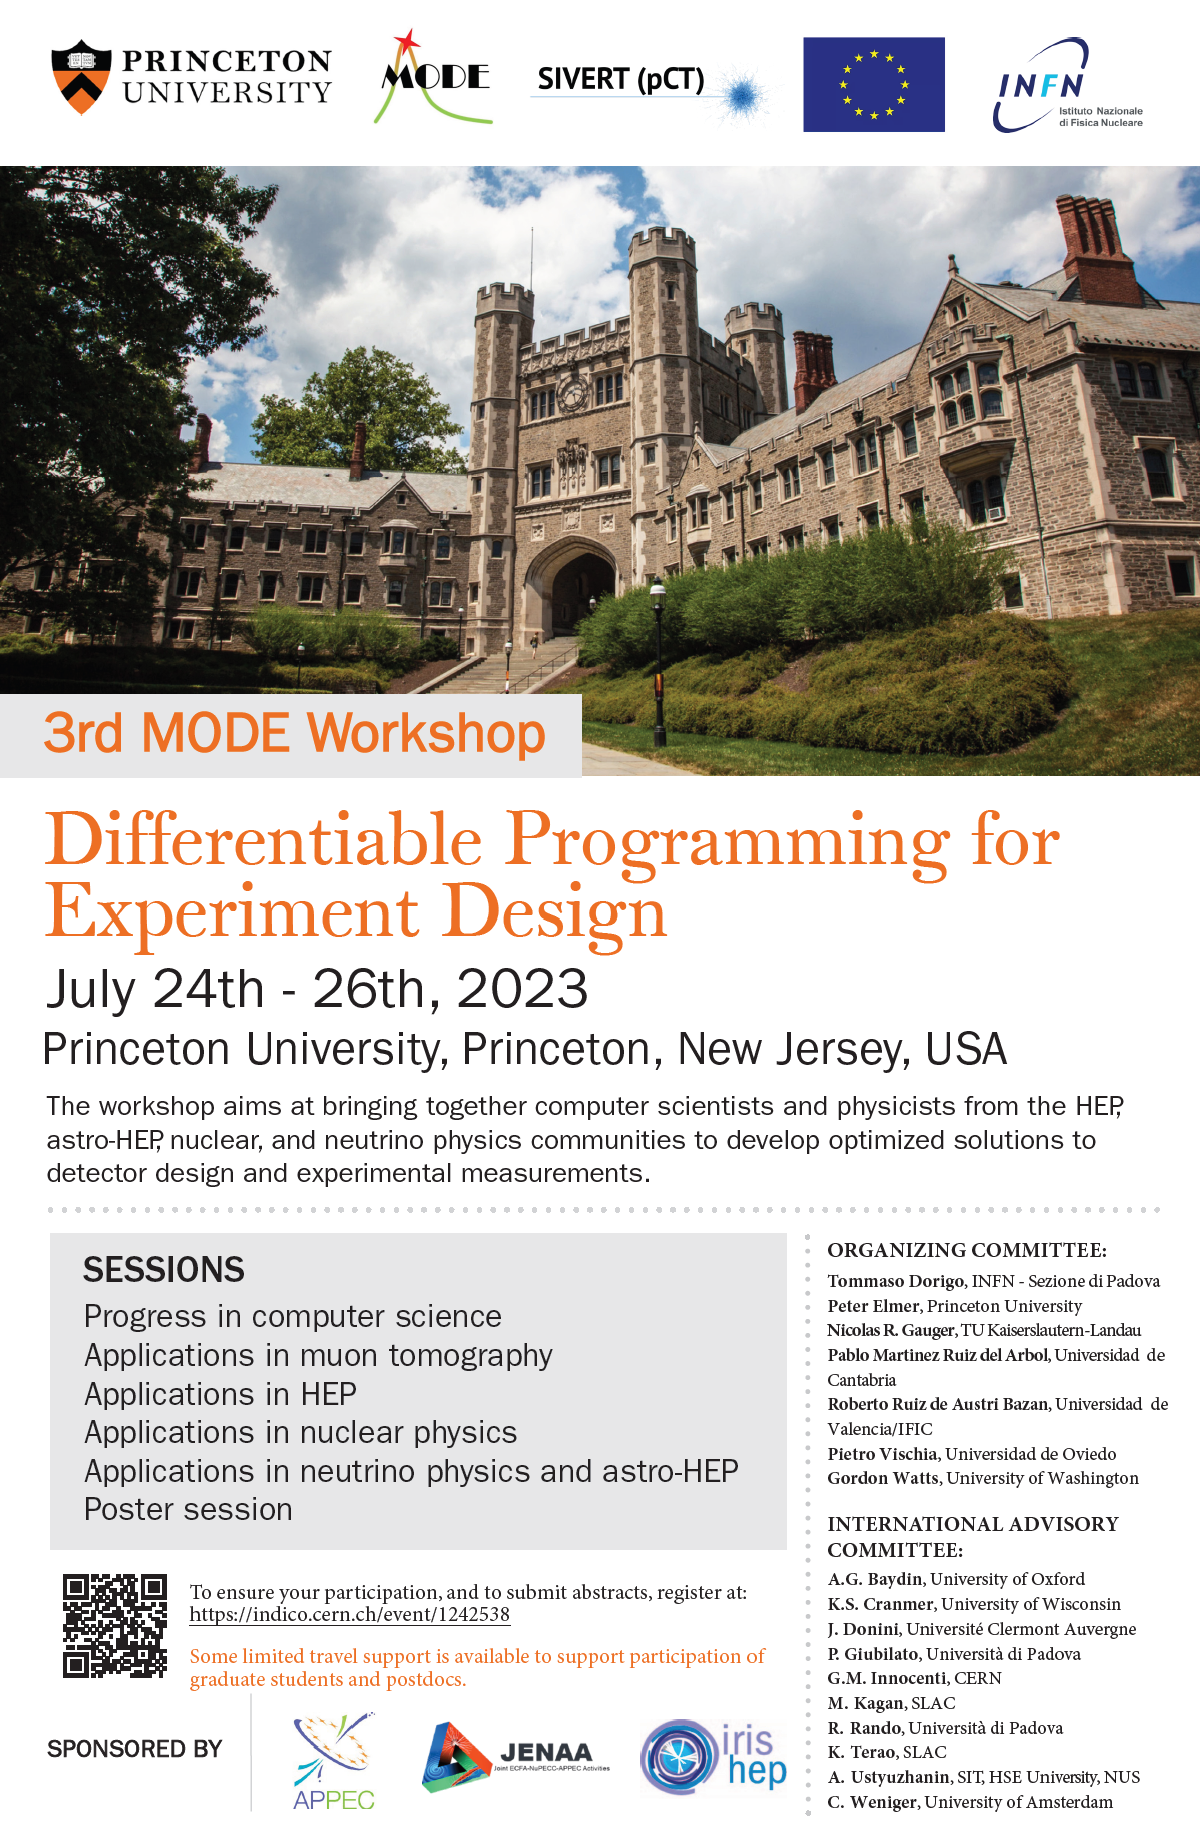 MODE Workshop In Princeton